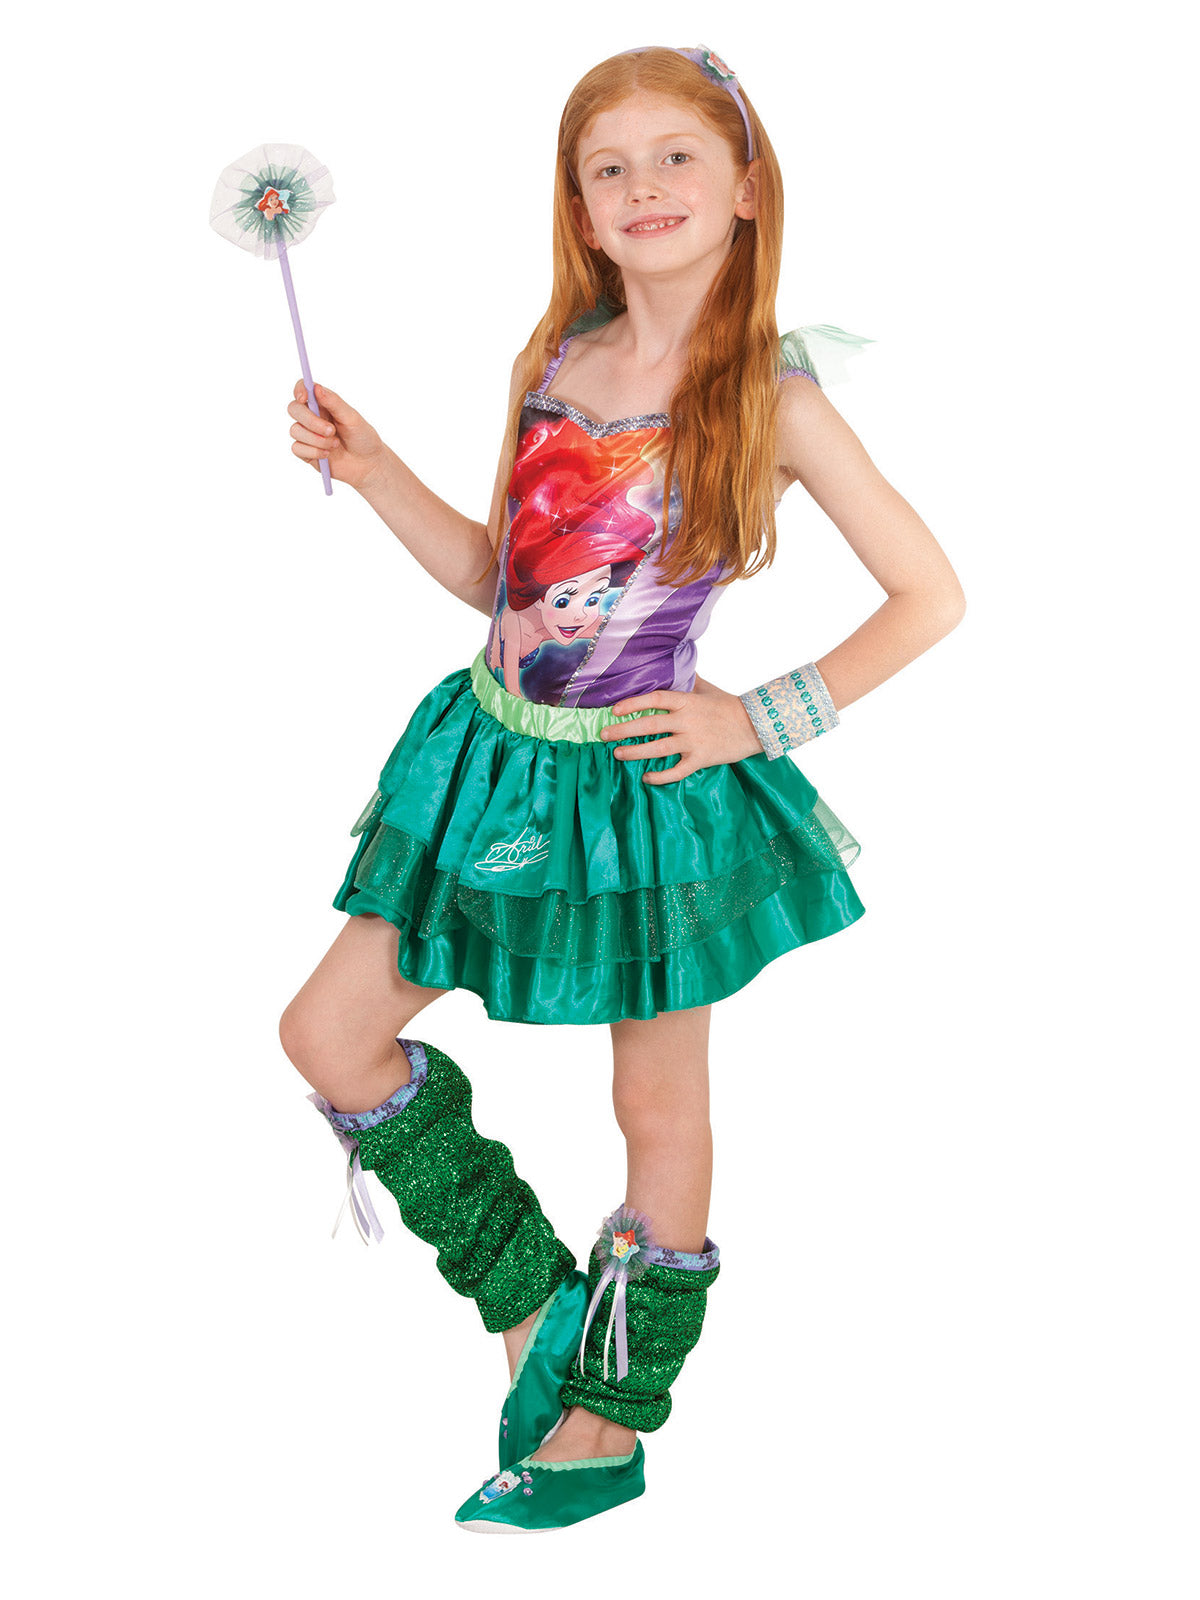 Ariel Princess Tutu Skirt Girls Child Costume